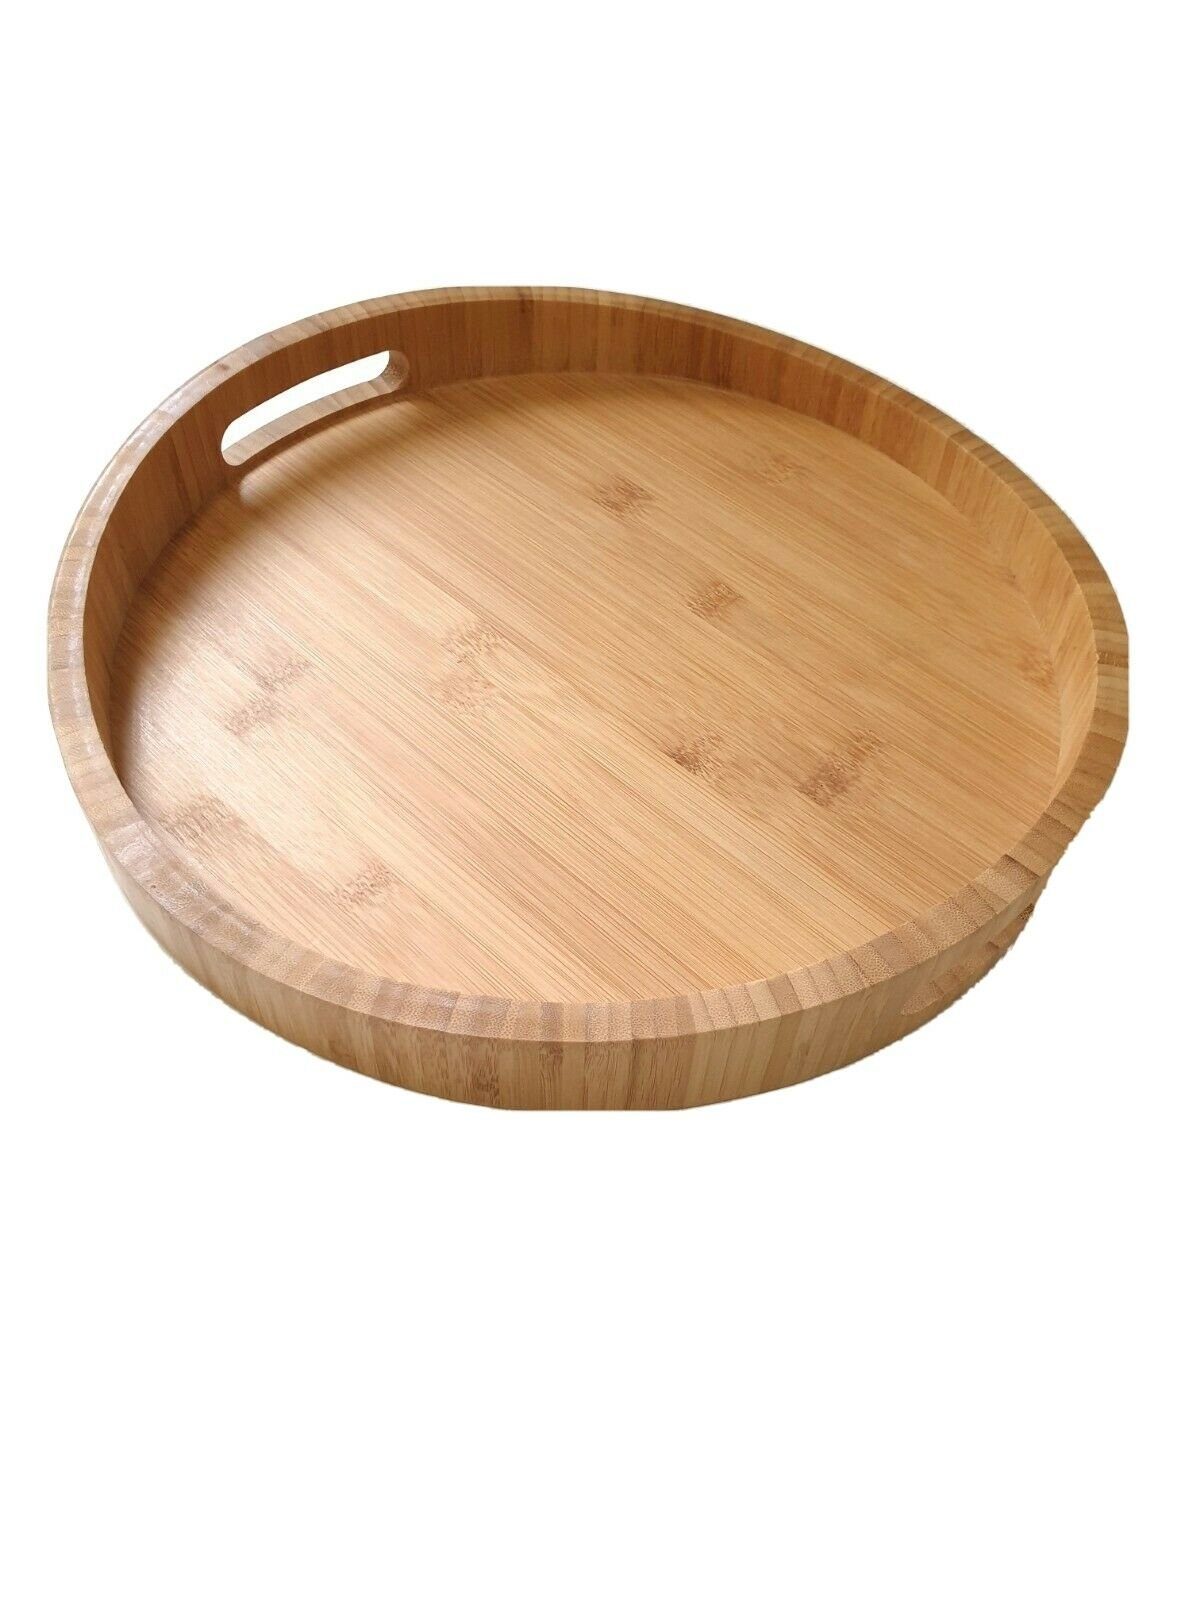 sesua Dekotablett Tablett aus Bambusholz Bambustablett Holztablett Durchmesser 35 cm